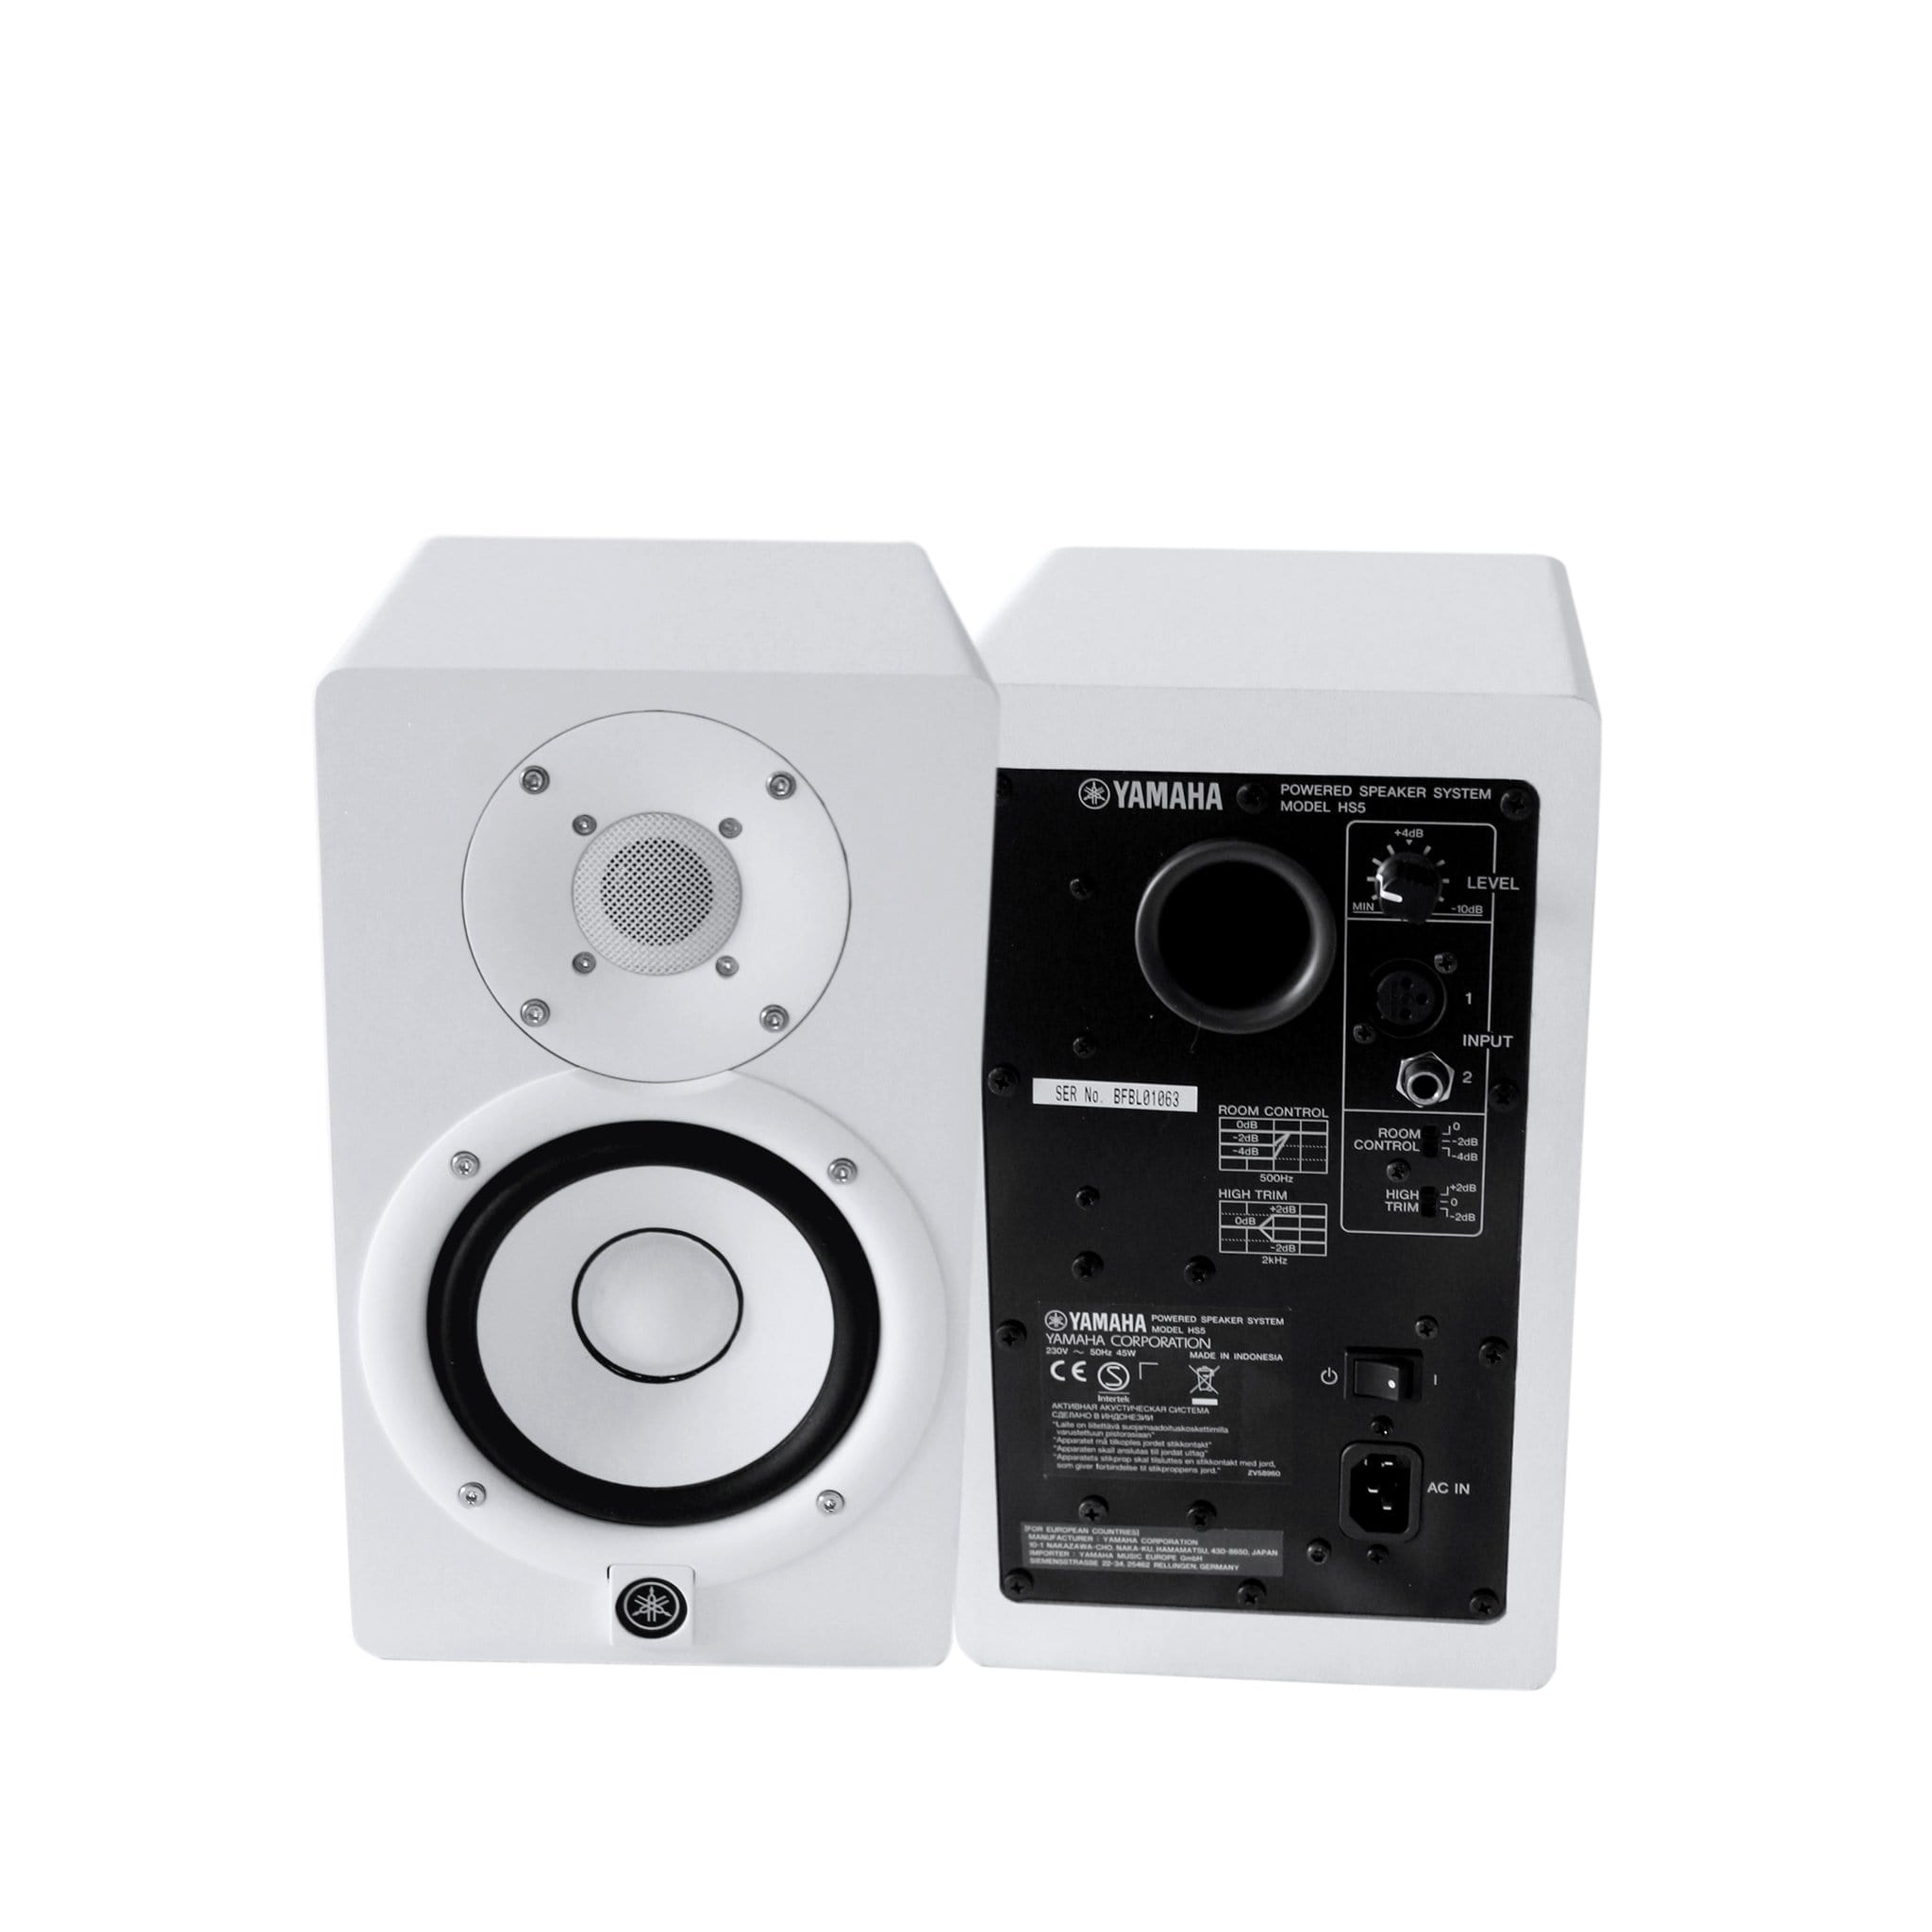 Yamaha HS5 studio monitors review - Higher Hz